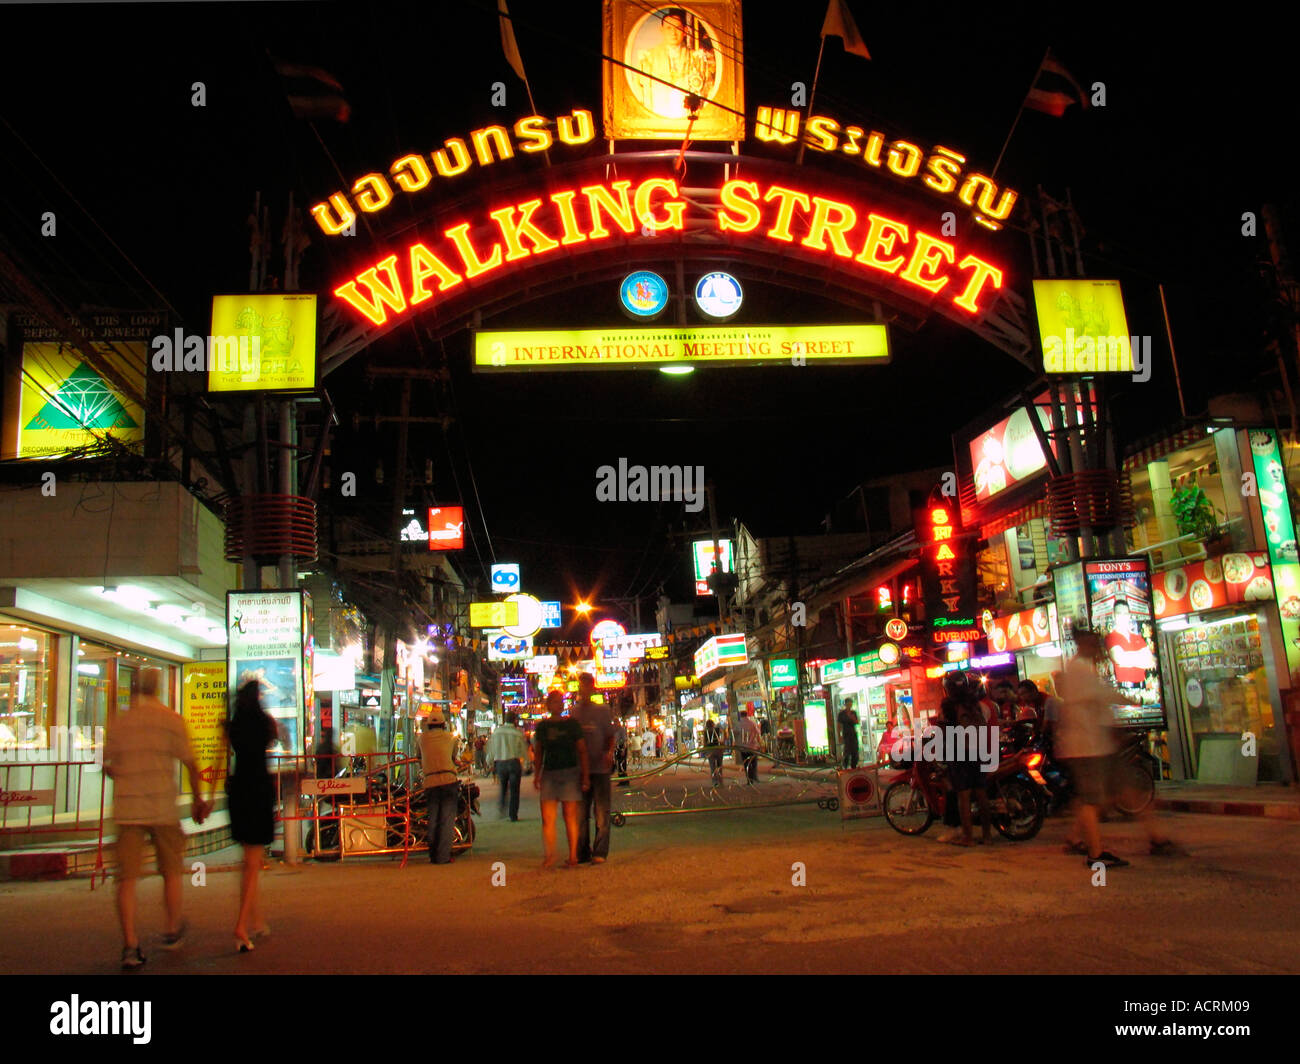 Walking Street illuminated at night Pattaya Thailand Stock Photo - Alamy